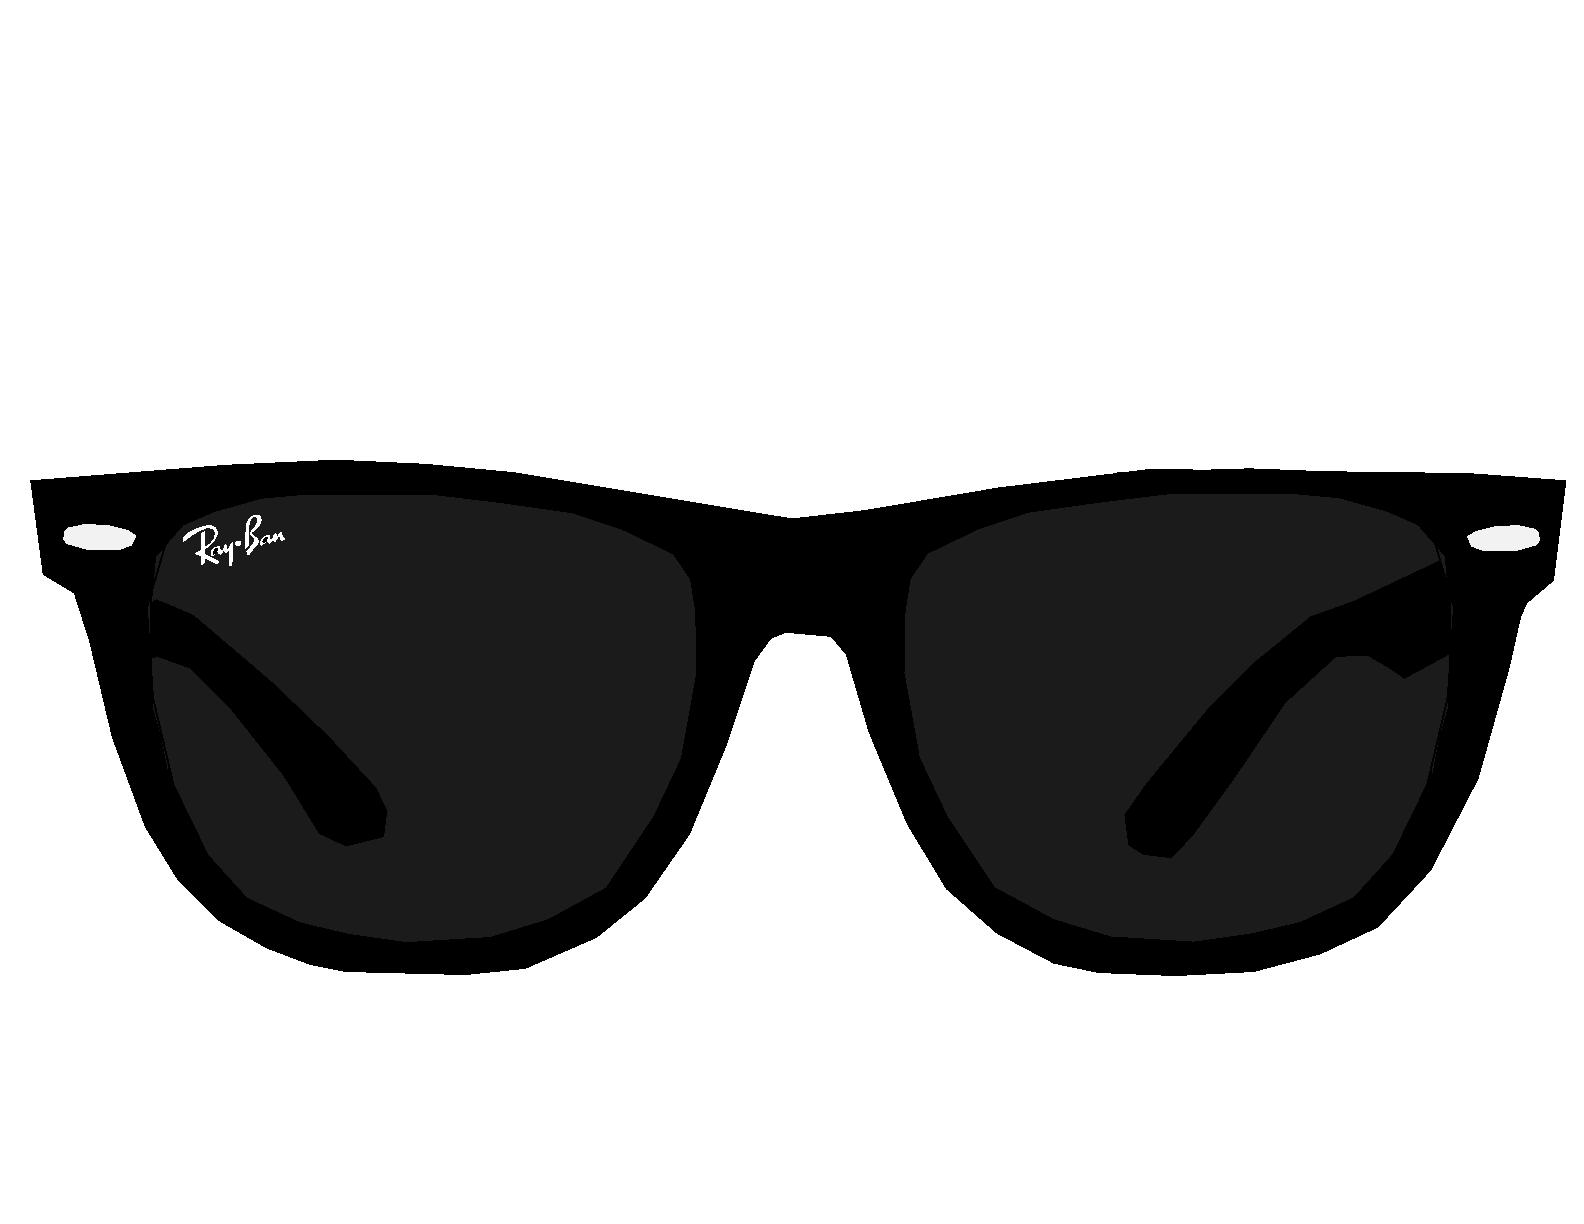 Sunglasses clip art free clipart image 